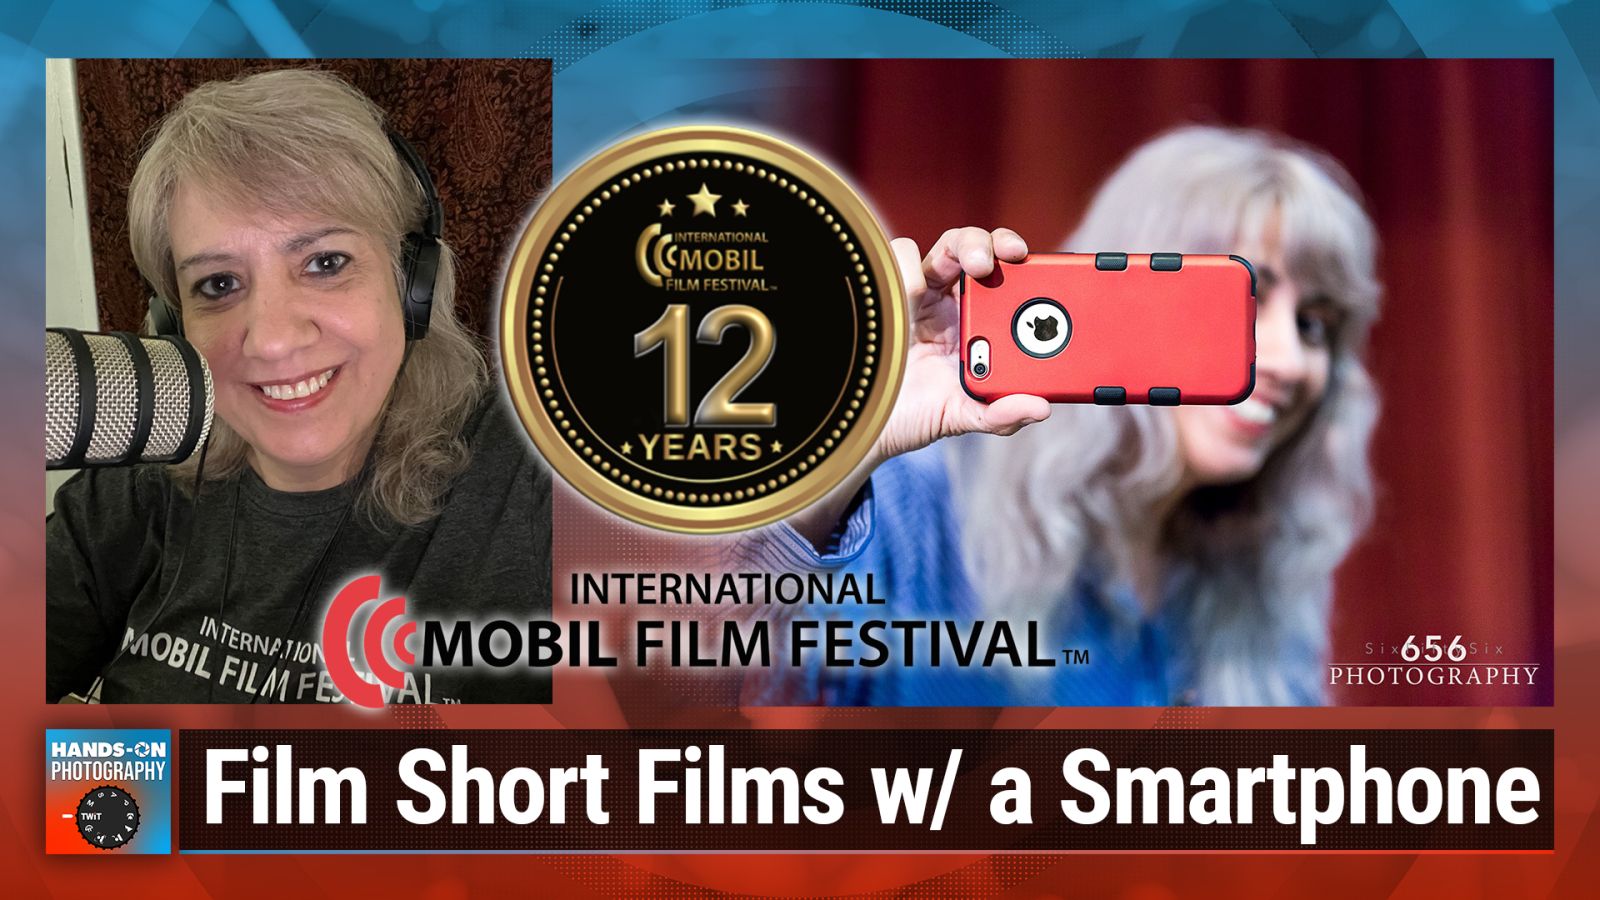 mumlende reservation Så hurtigt som en flash Susy Botello: International Mobile Film Festival